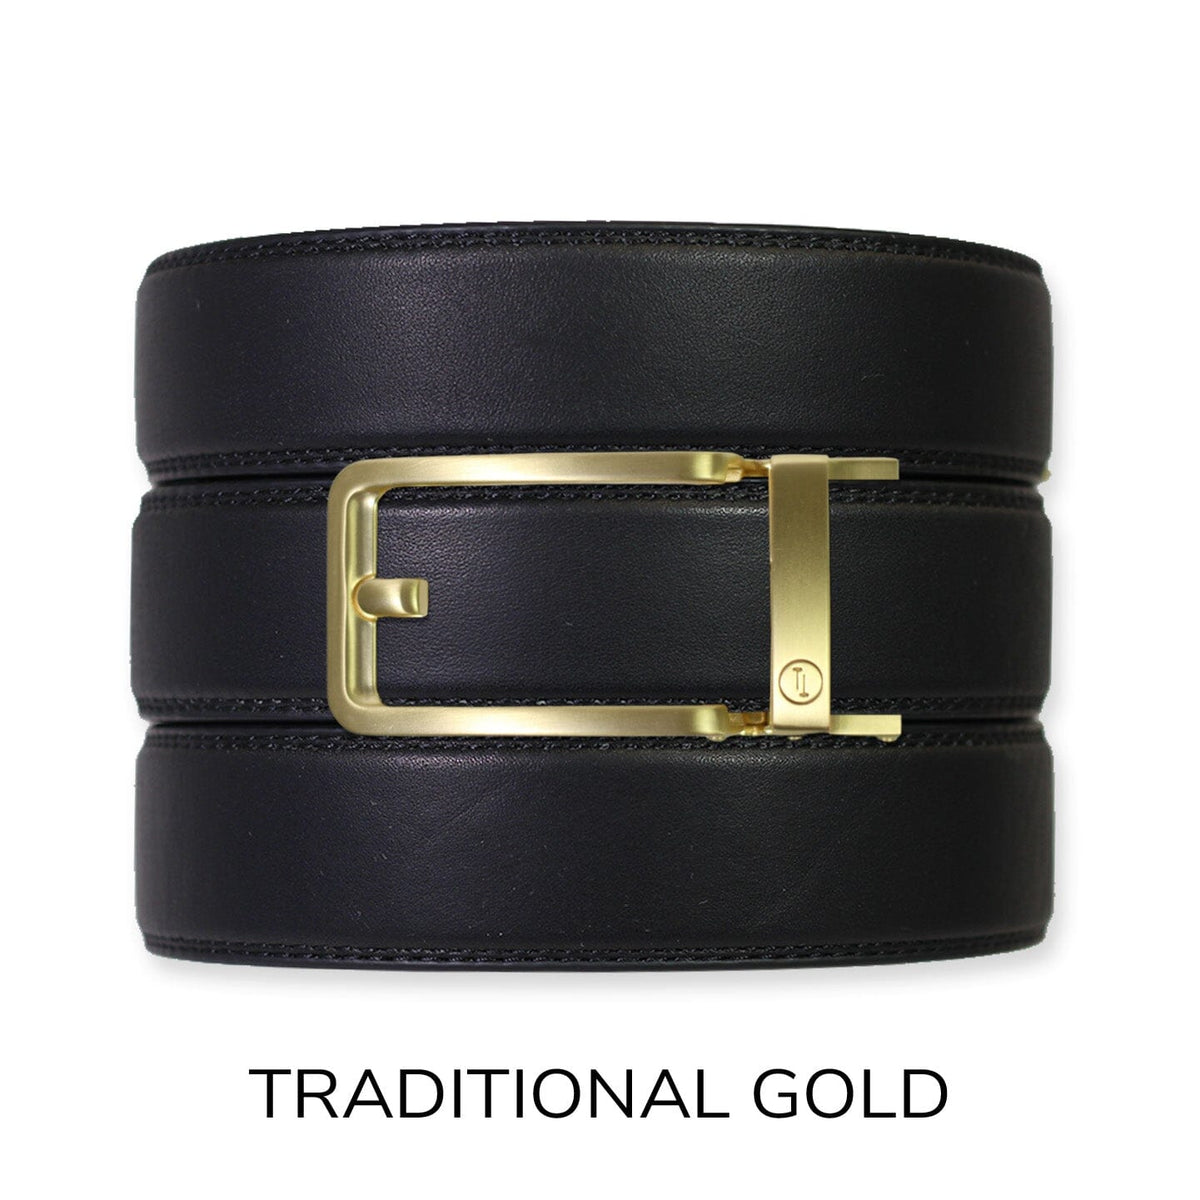 Genuine Leather Mens Ratchet Belt - Belts For Men With Adjustable Automatic  Buckle